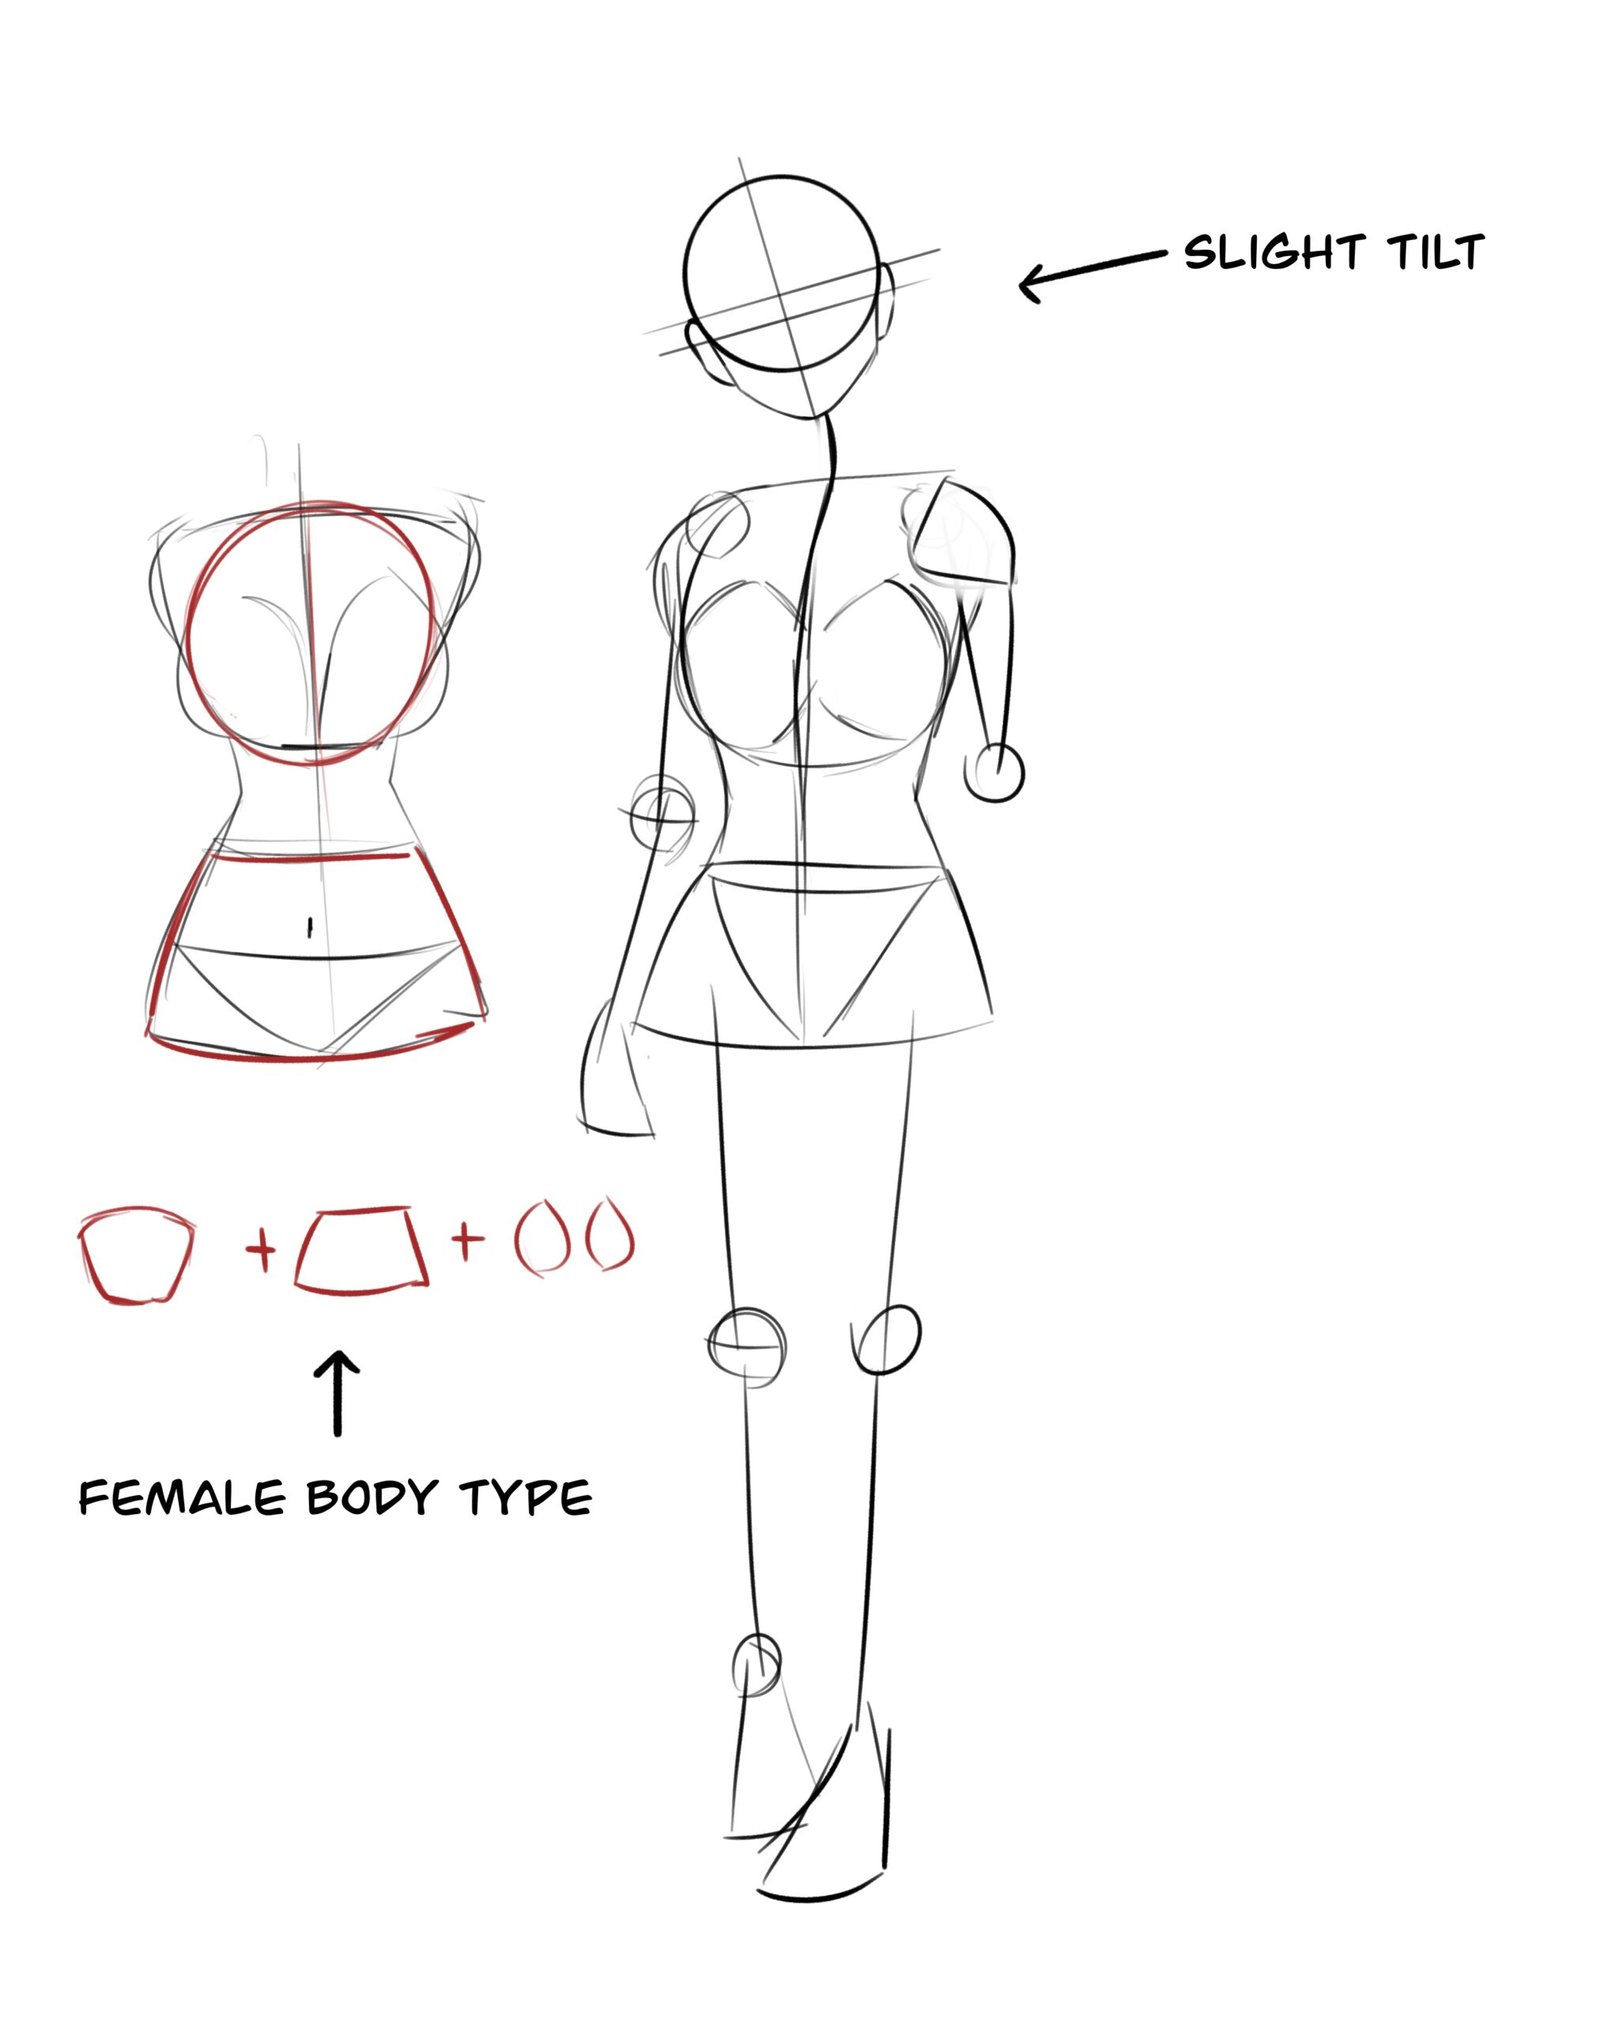 1) Draw Toga's Pose